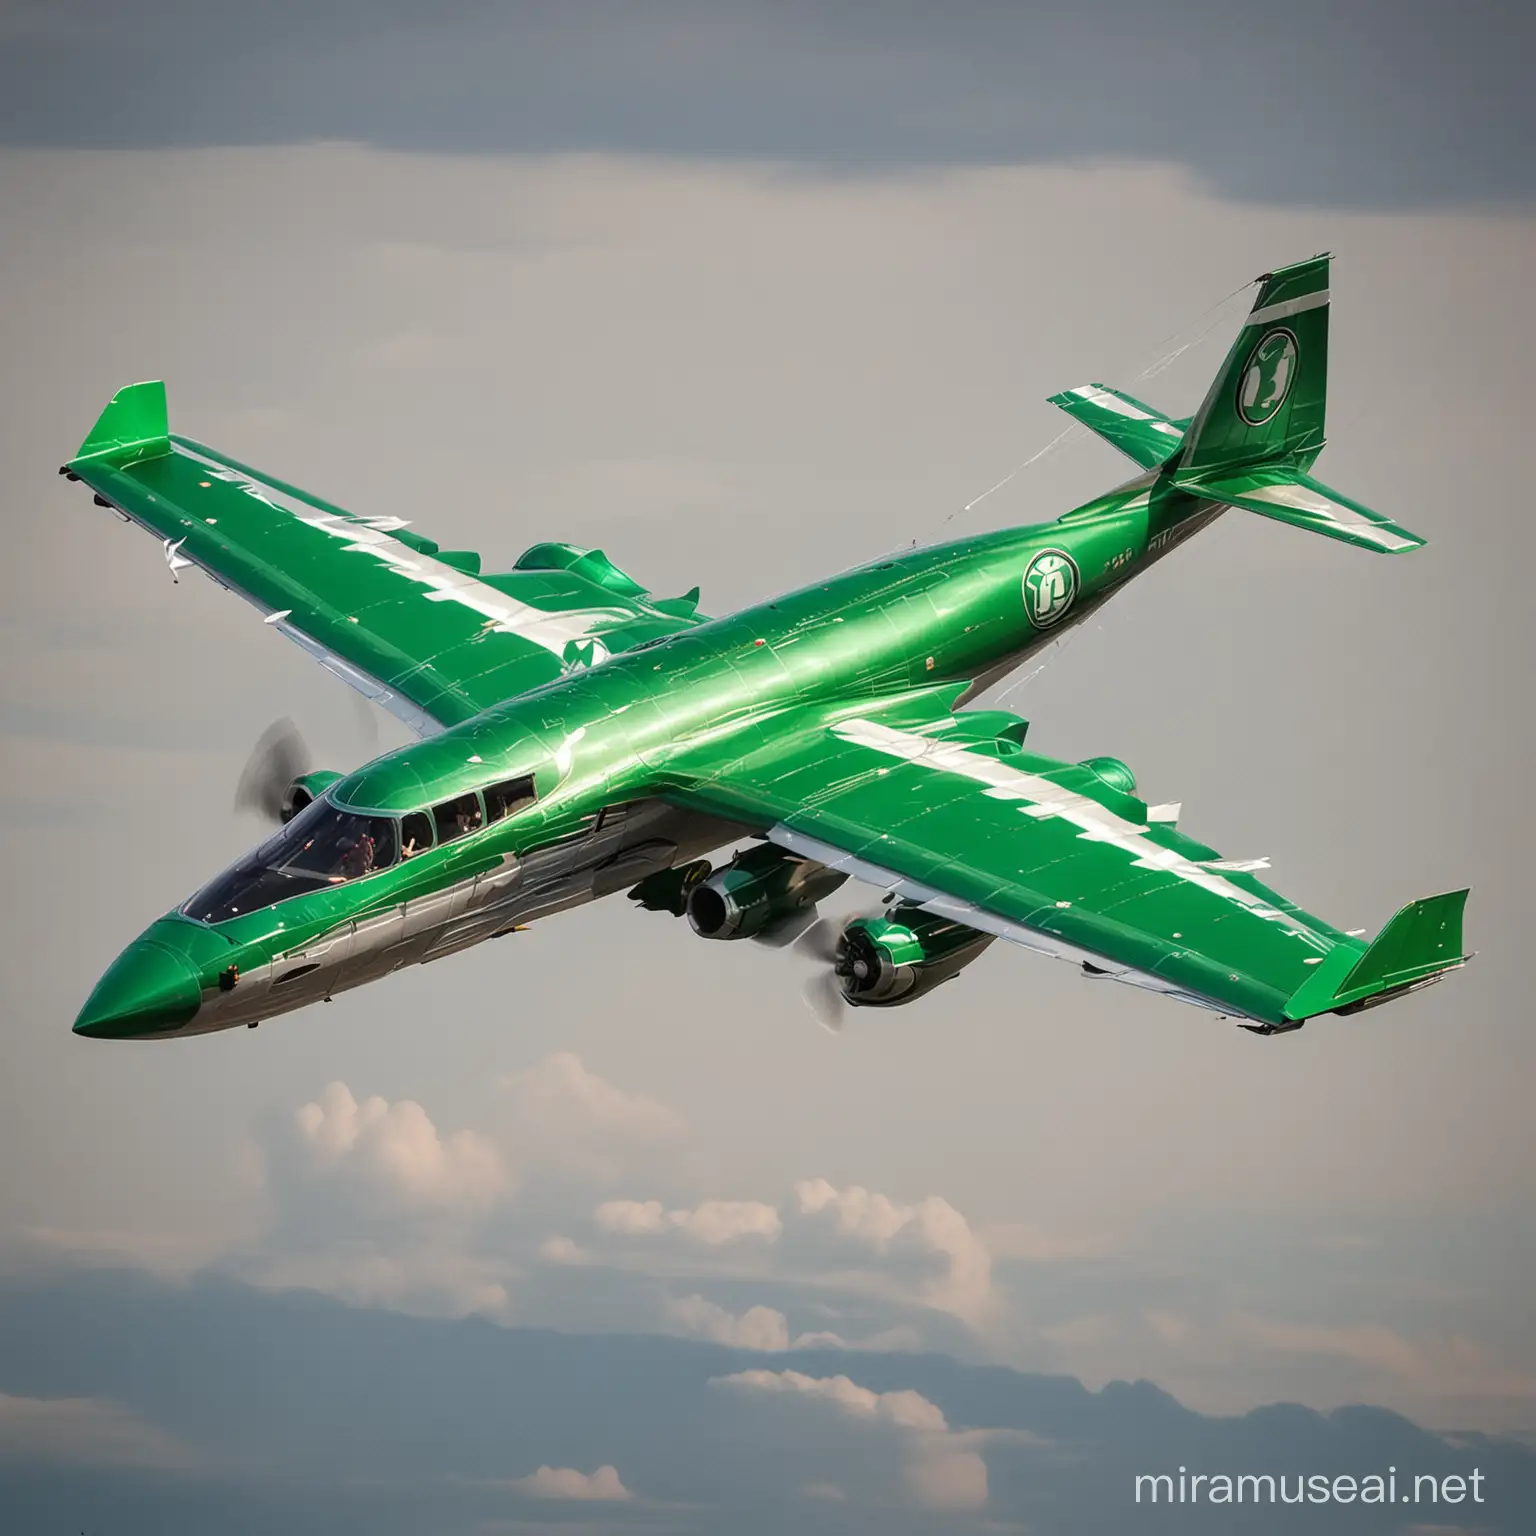 Futuristic Green Lantern Style Airplane Soaring Through a Vibrant Sky